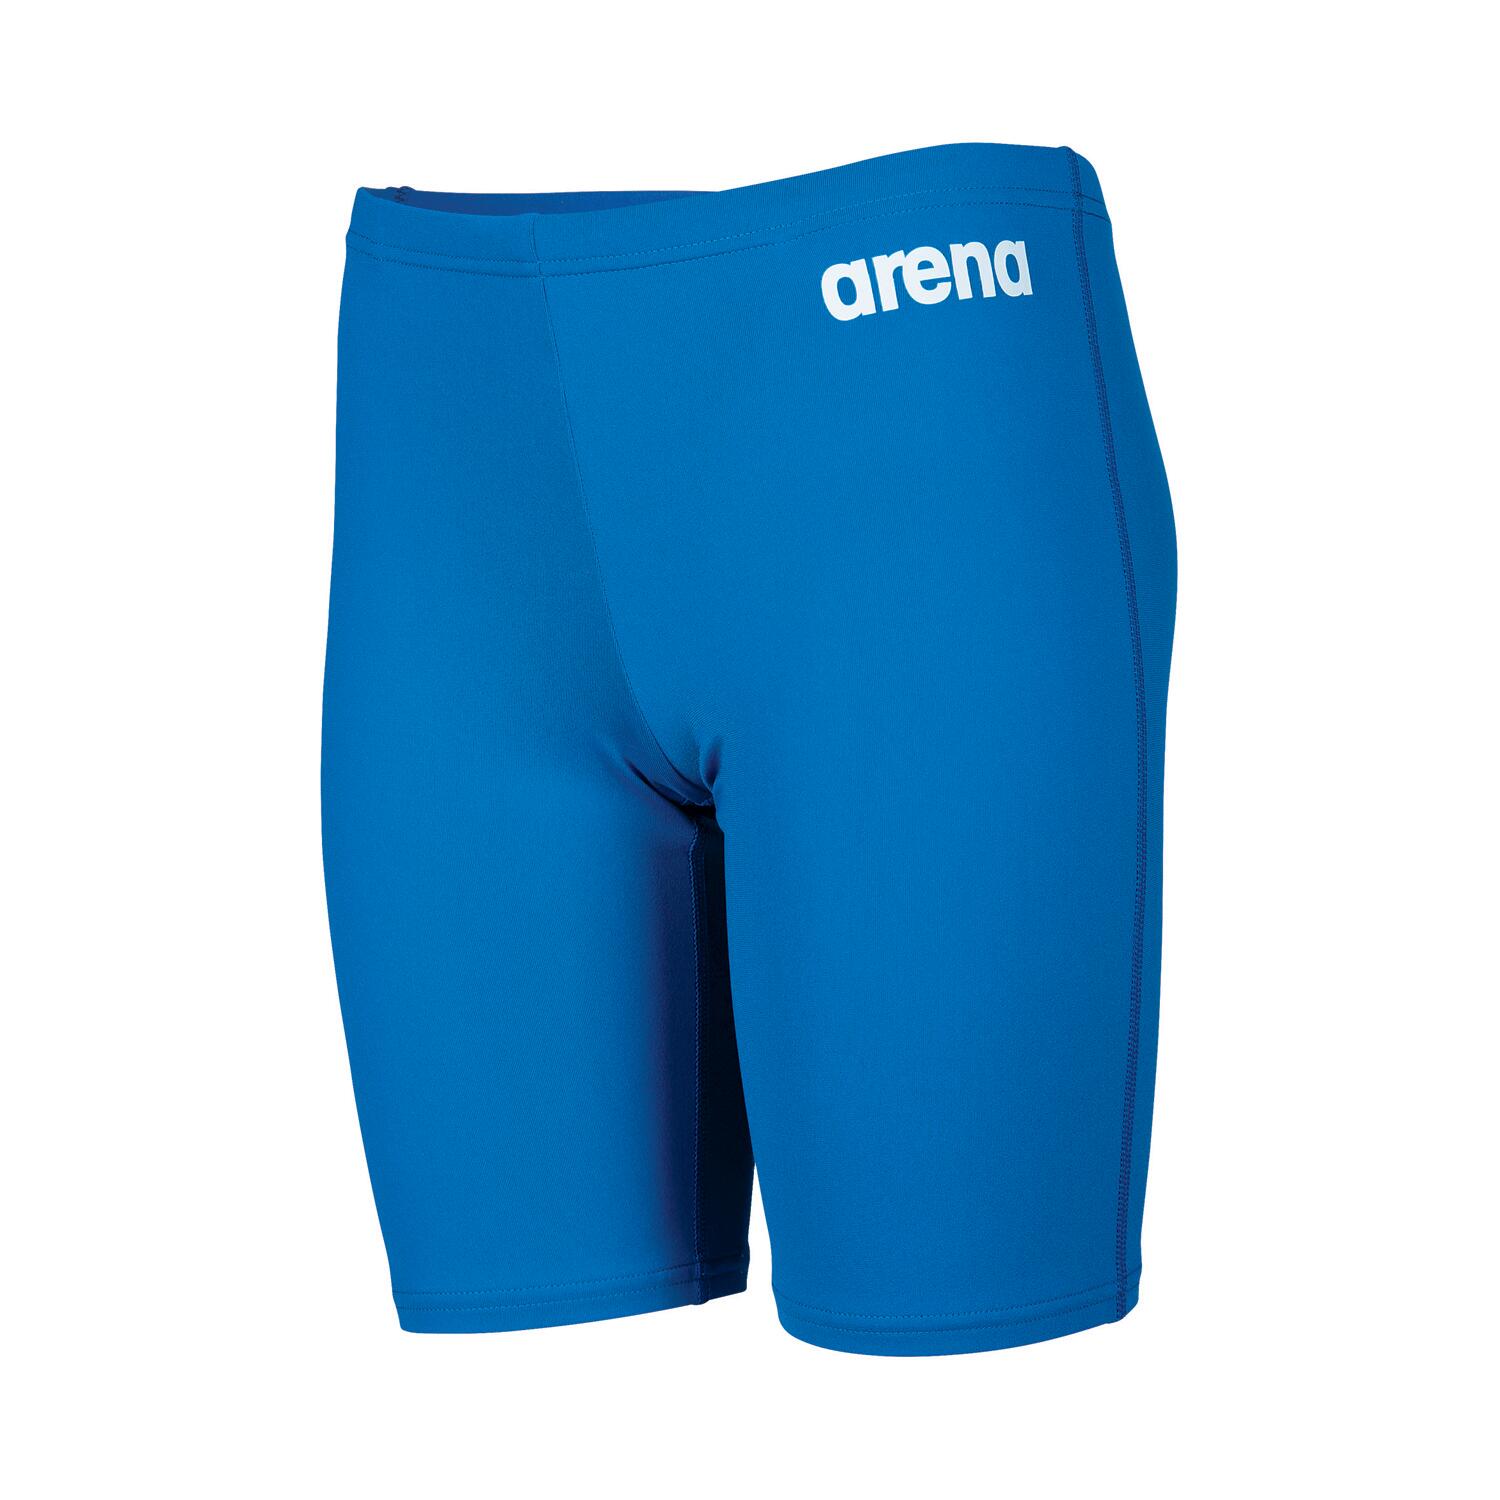 ARENA Arena Boys Team Solid Swim Jammer - Royal/White